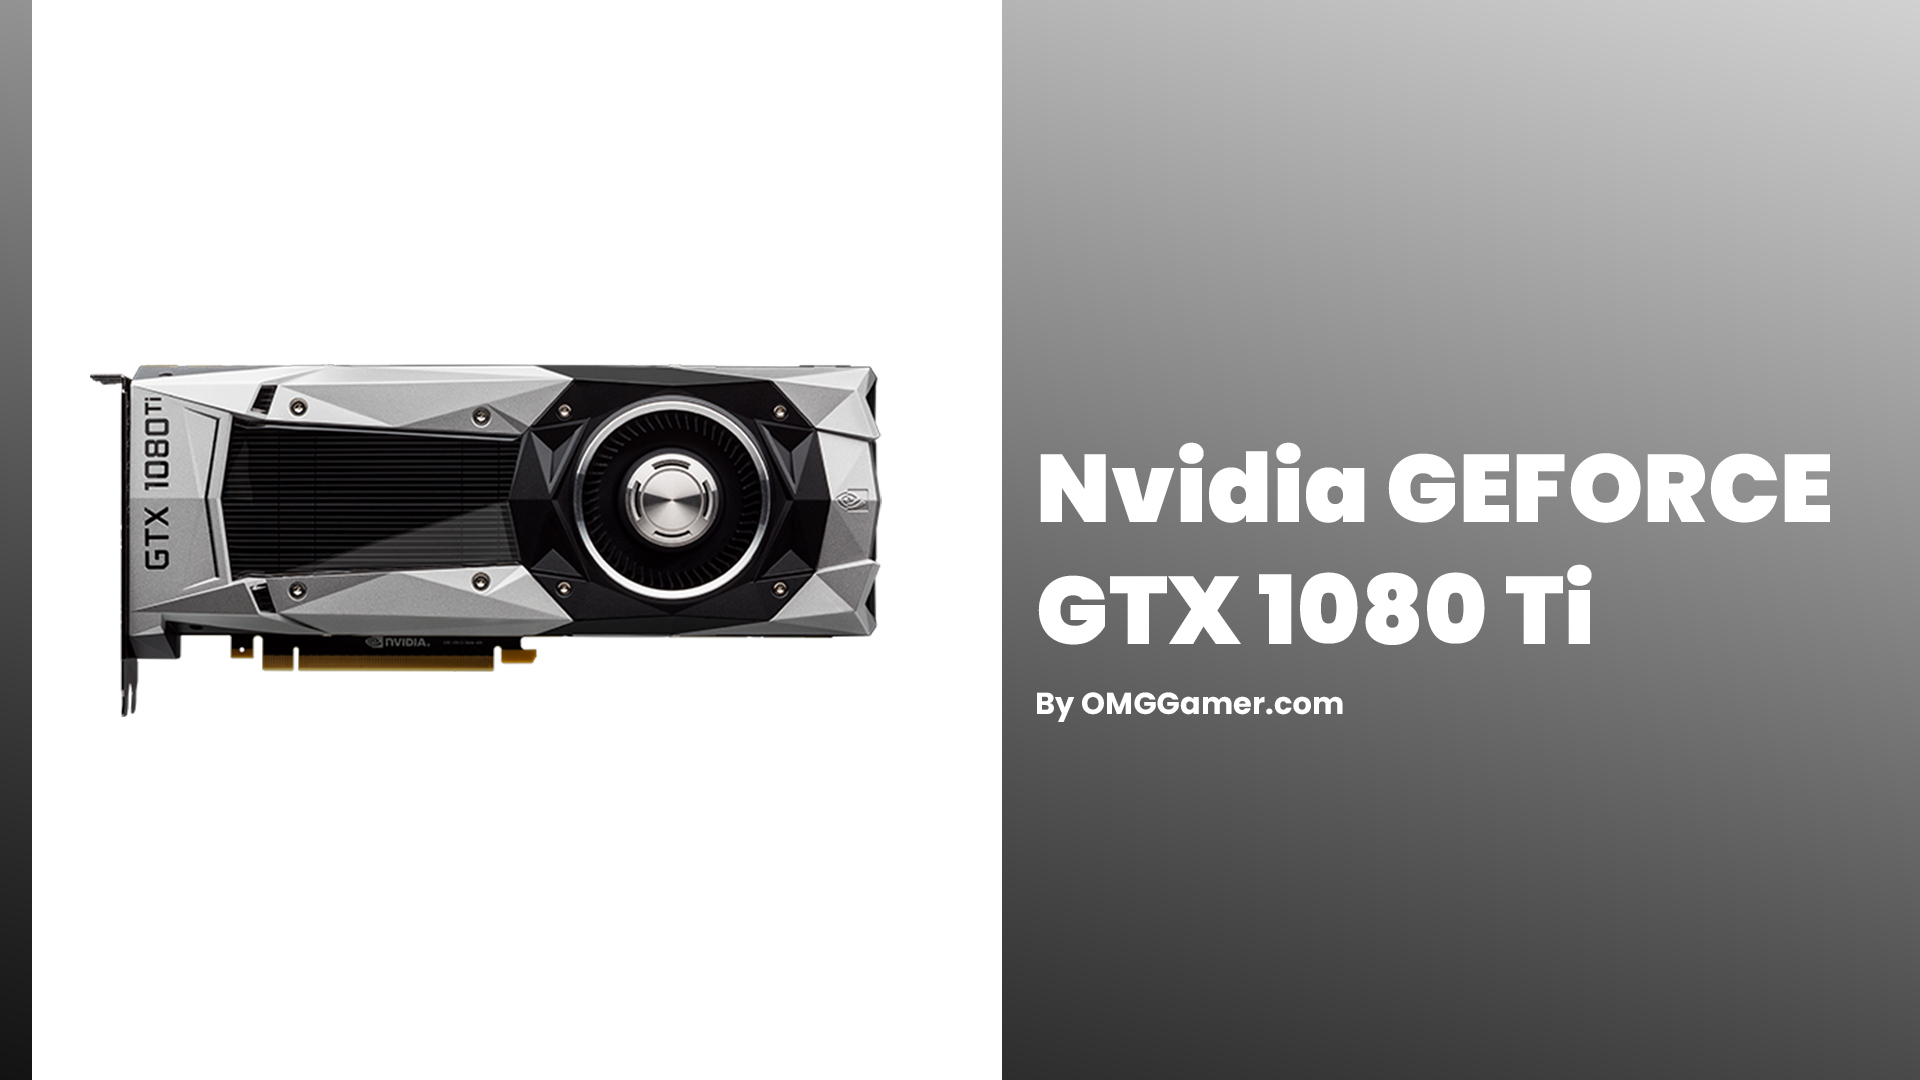 Nvidia GEFORCE GTX 1080 Ti: Cheapest 4K Graphics Cards